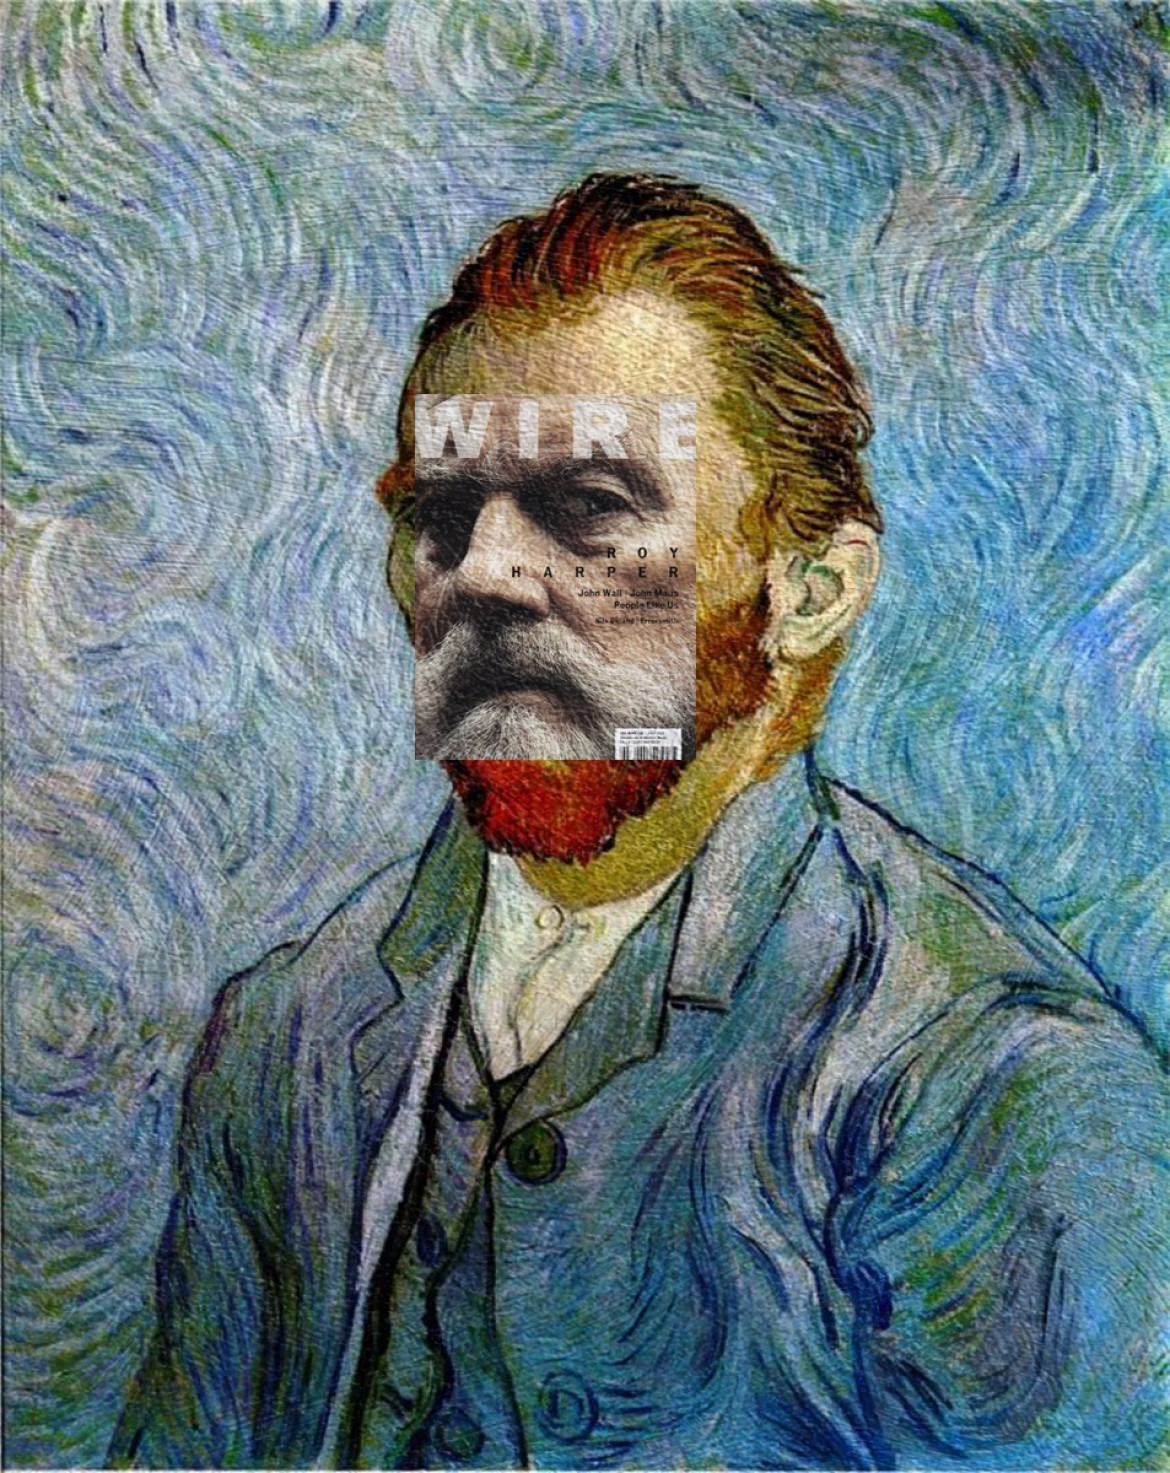 Roy Harper, The Wire July 2011 + Self-Portrait, September 1889 by Vincent van Gogh